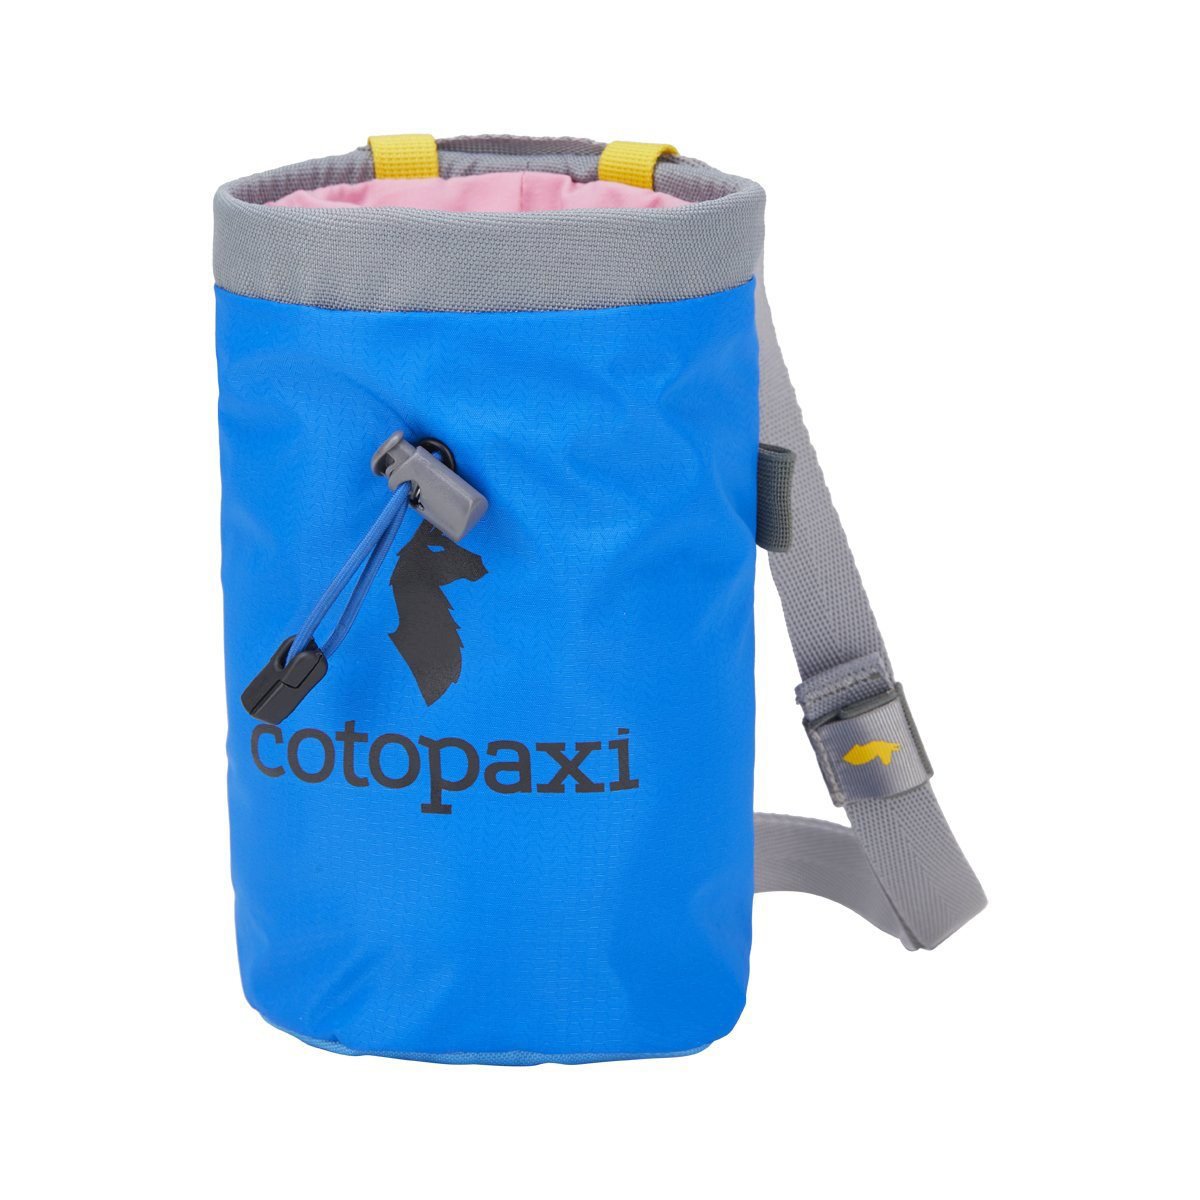 Cotopaxi Halcon Chalk Bag - Del Día コトパクシ ハルコン チョークバッグ デルディア